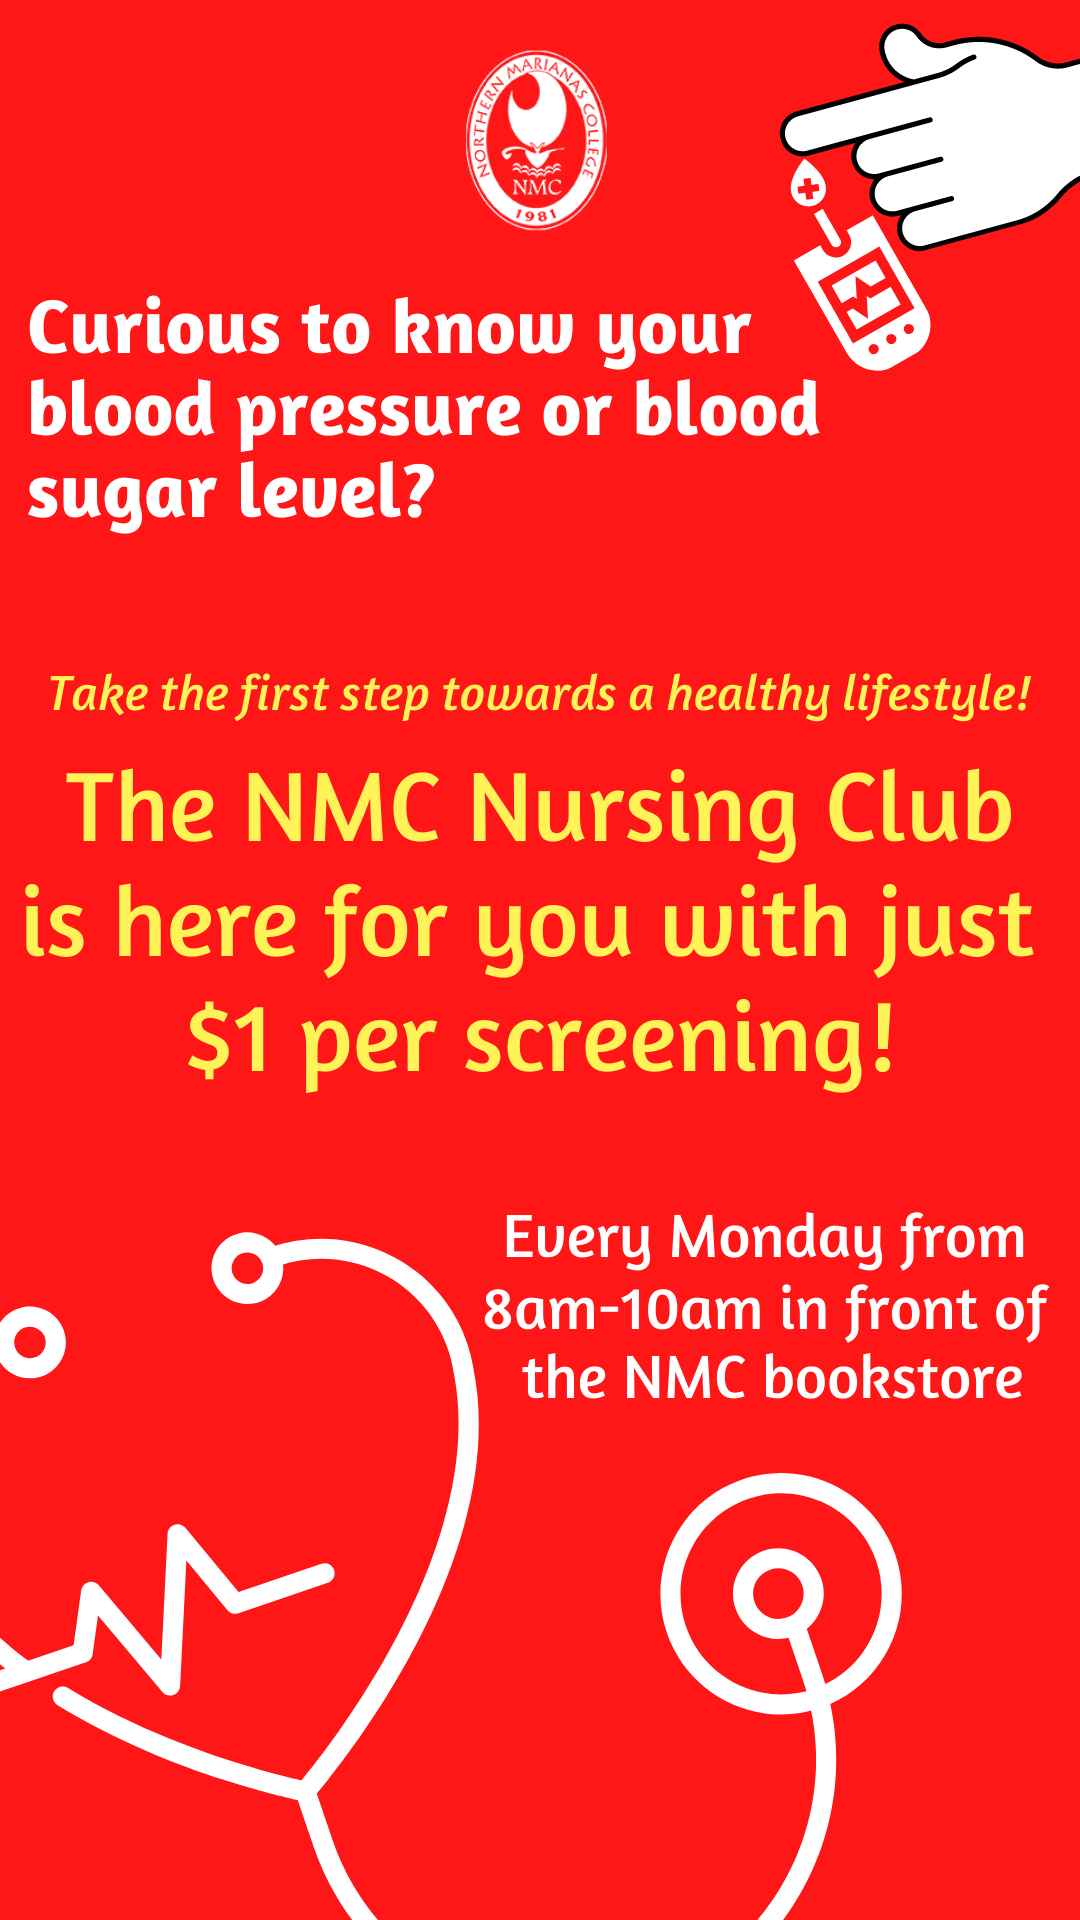 NMC Nursing Club blood screening flyer